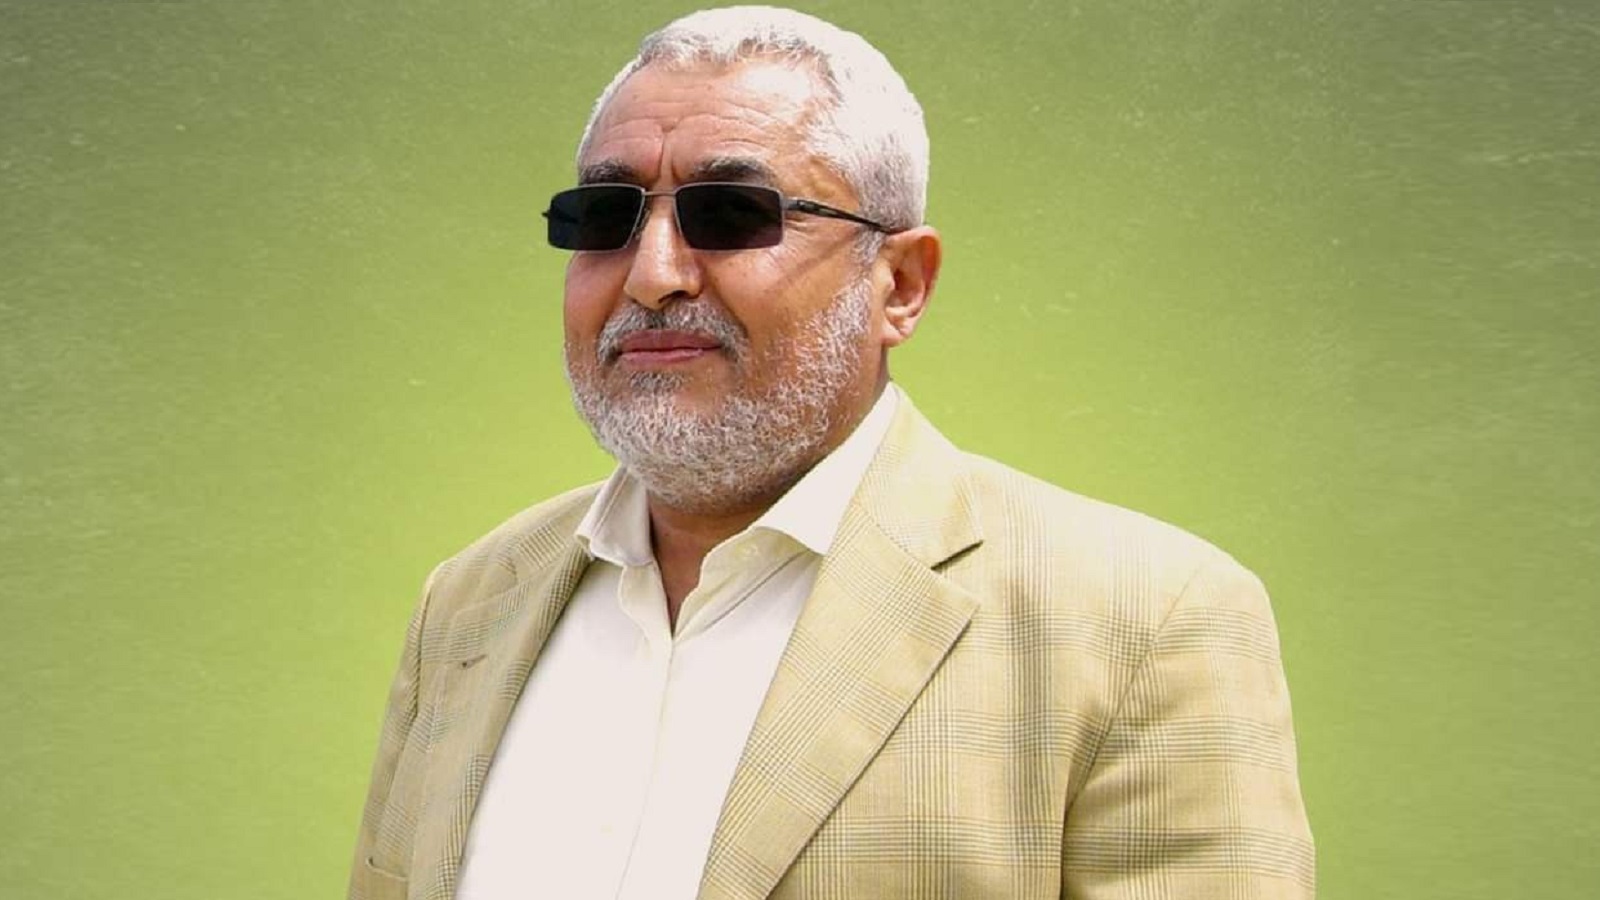 Yemen Gov’t Suspends Prisoner Exchange Talks With Houthi Rebels Over Detained Politician